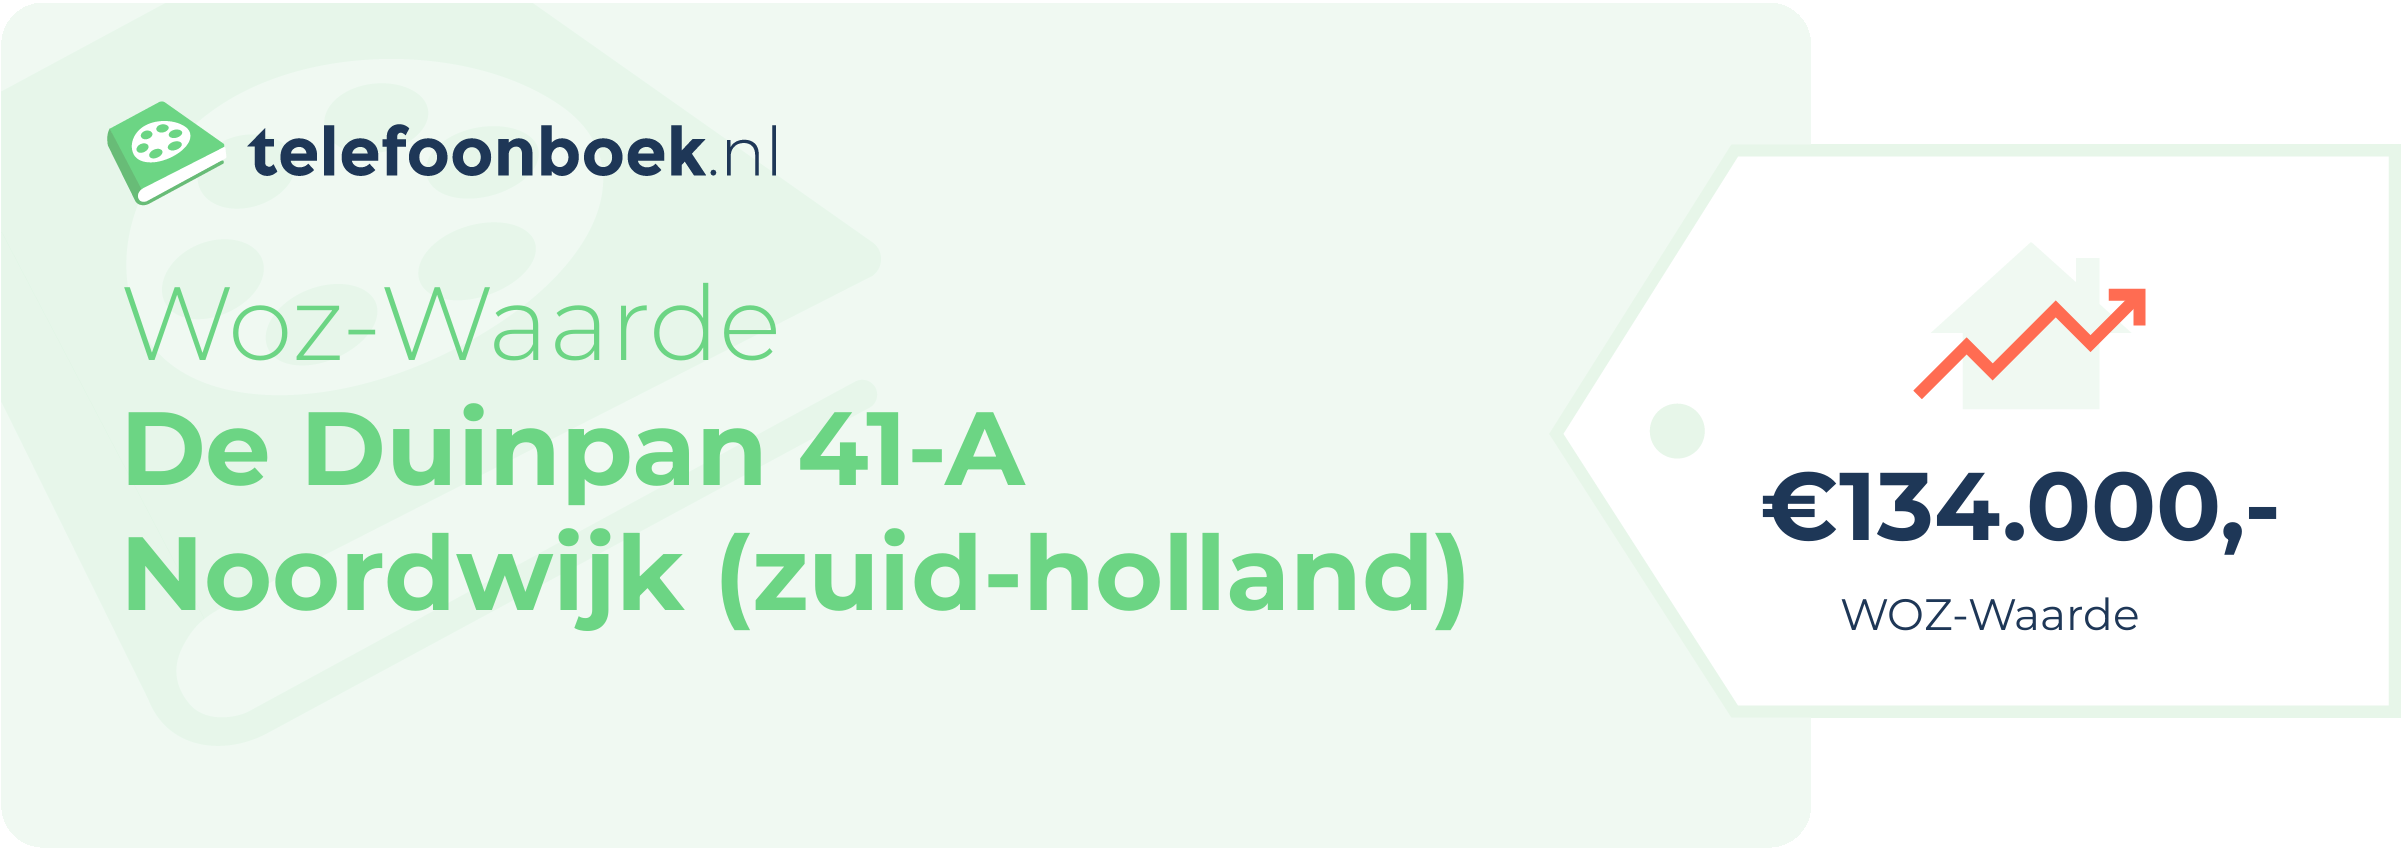 WOZ-waarde De Duinpan 41-A Noordwijk (Zuid-Holland)